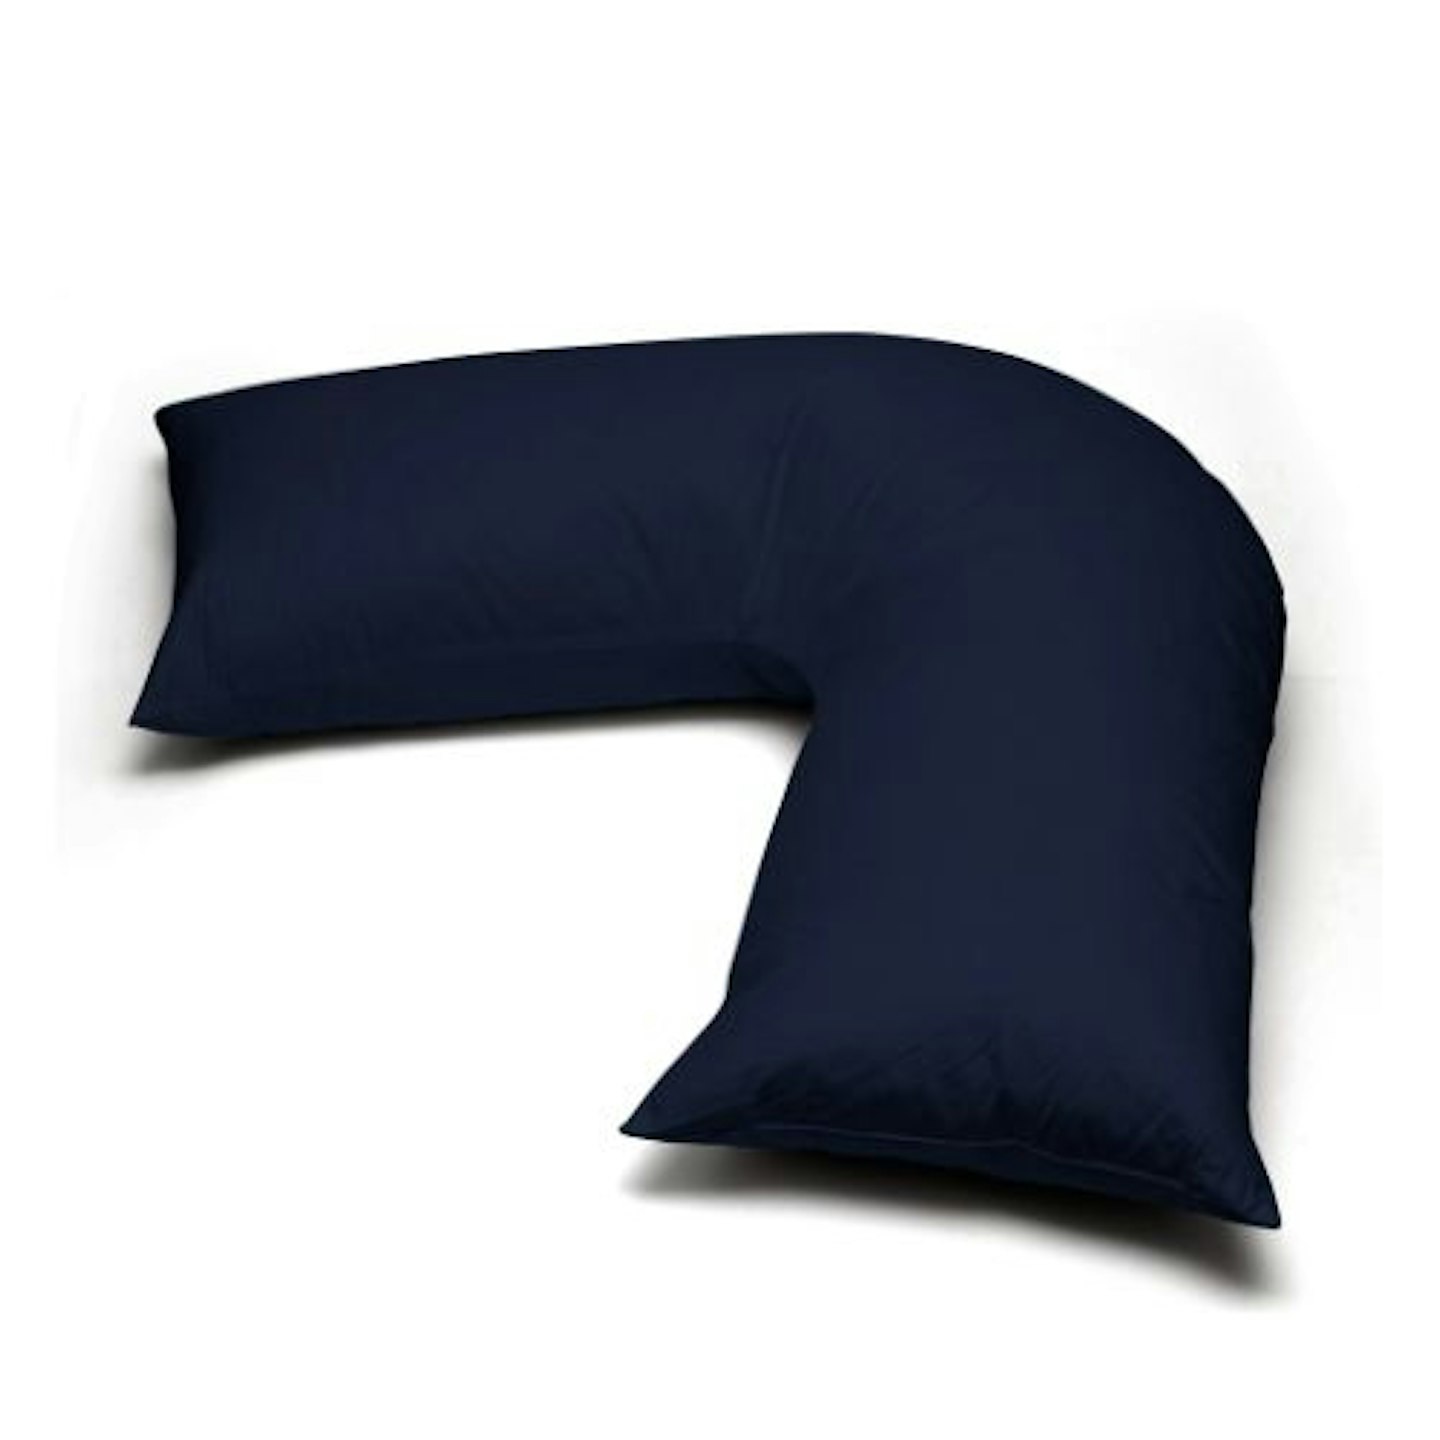 wayfair 17 Stories Aaravi Pillowcase-V-shaped pillowcases